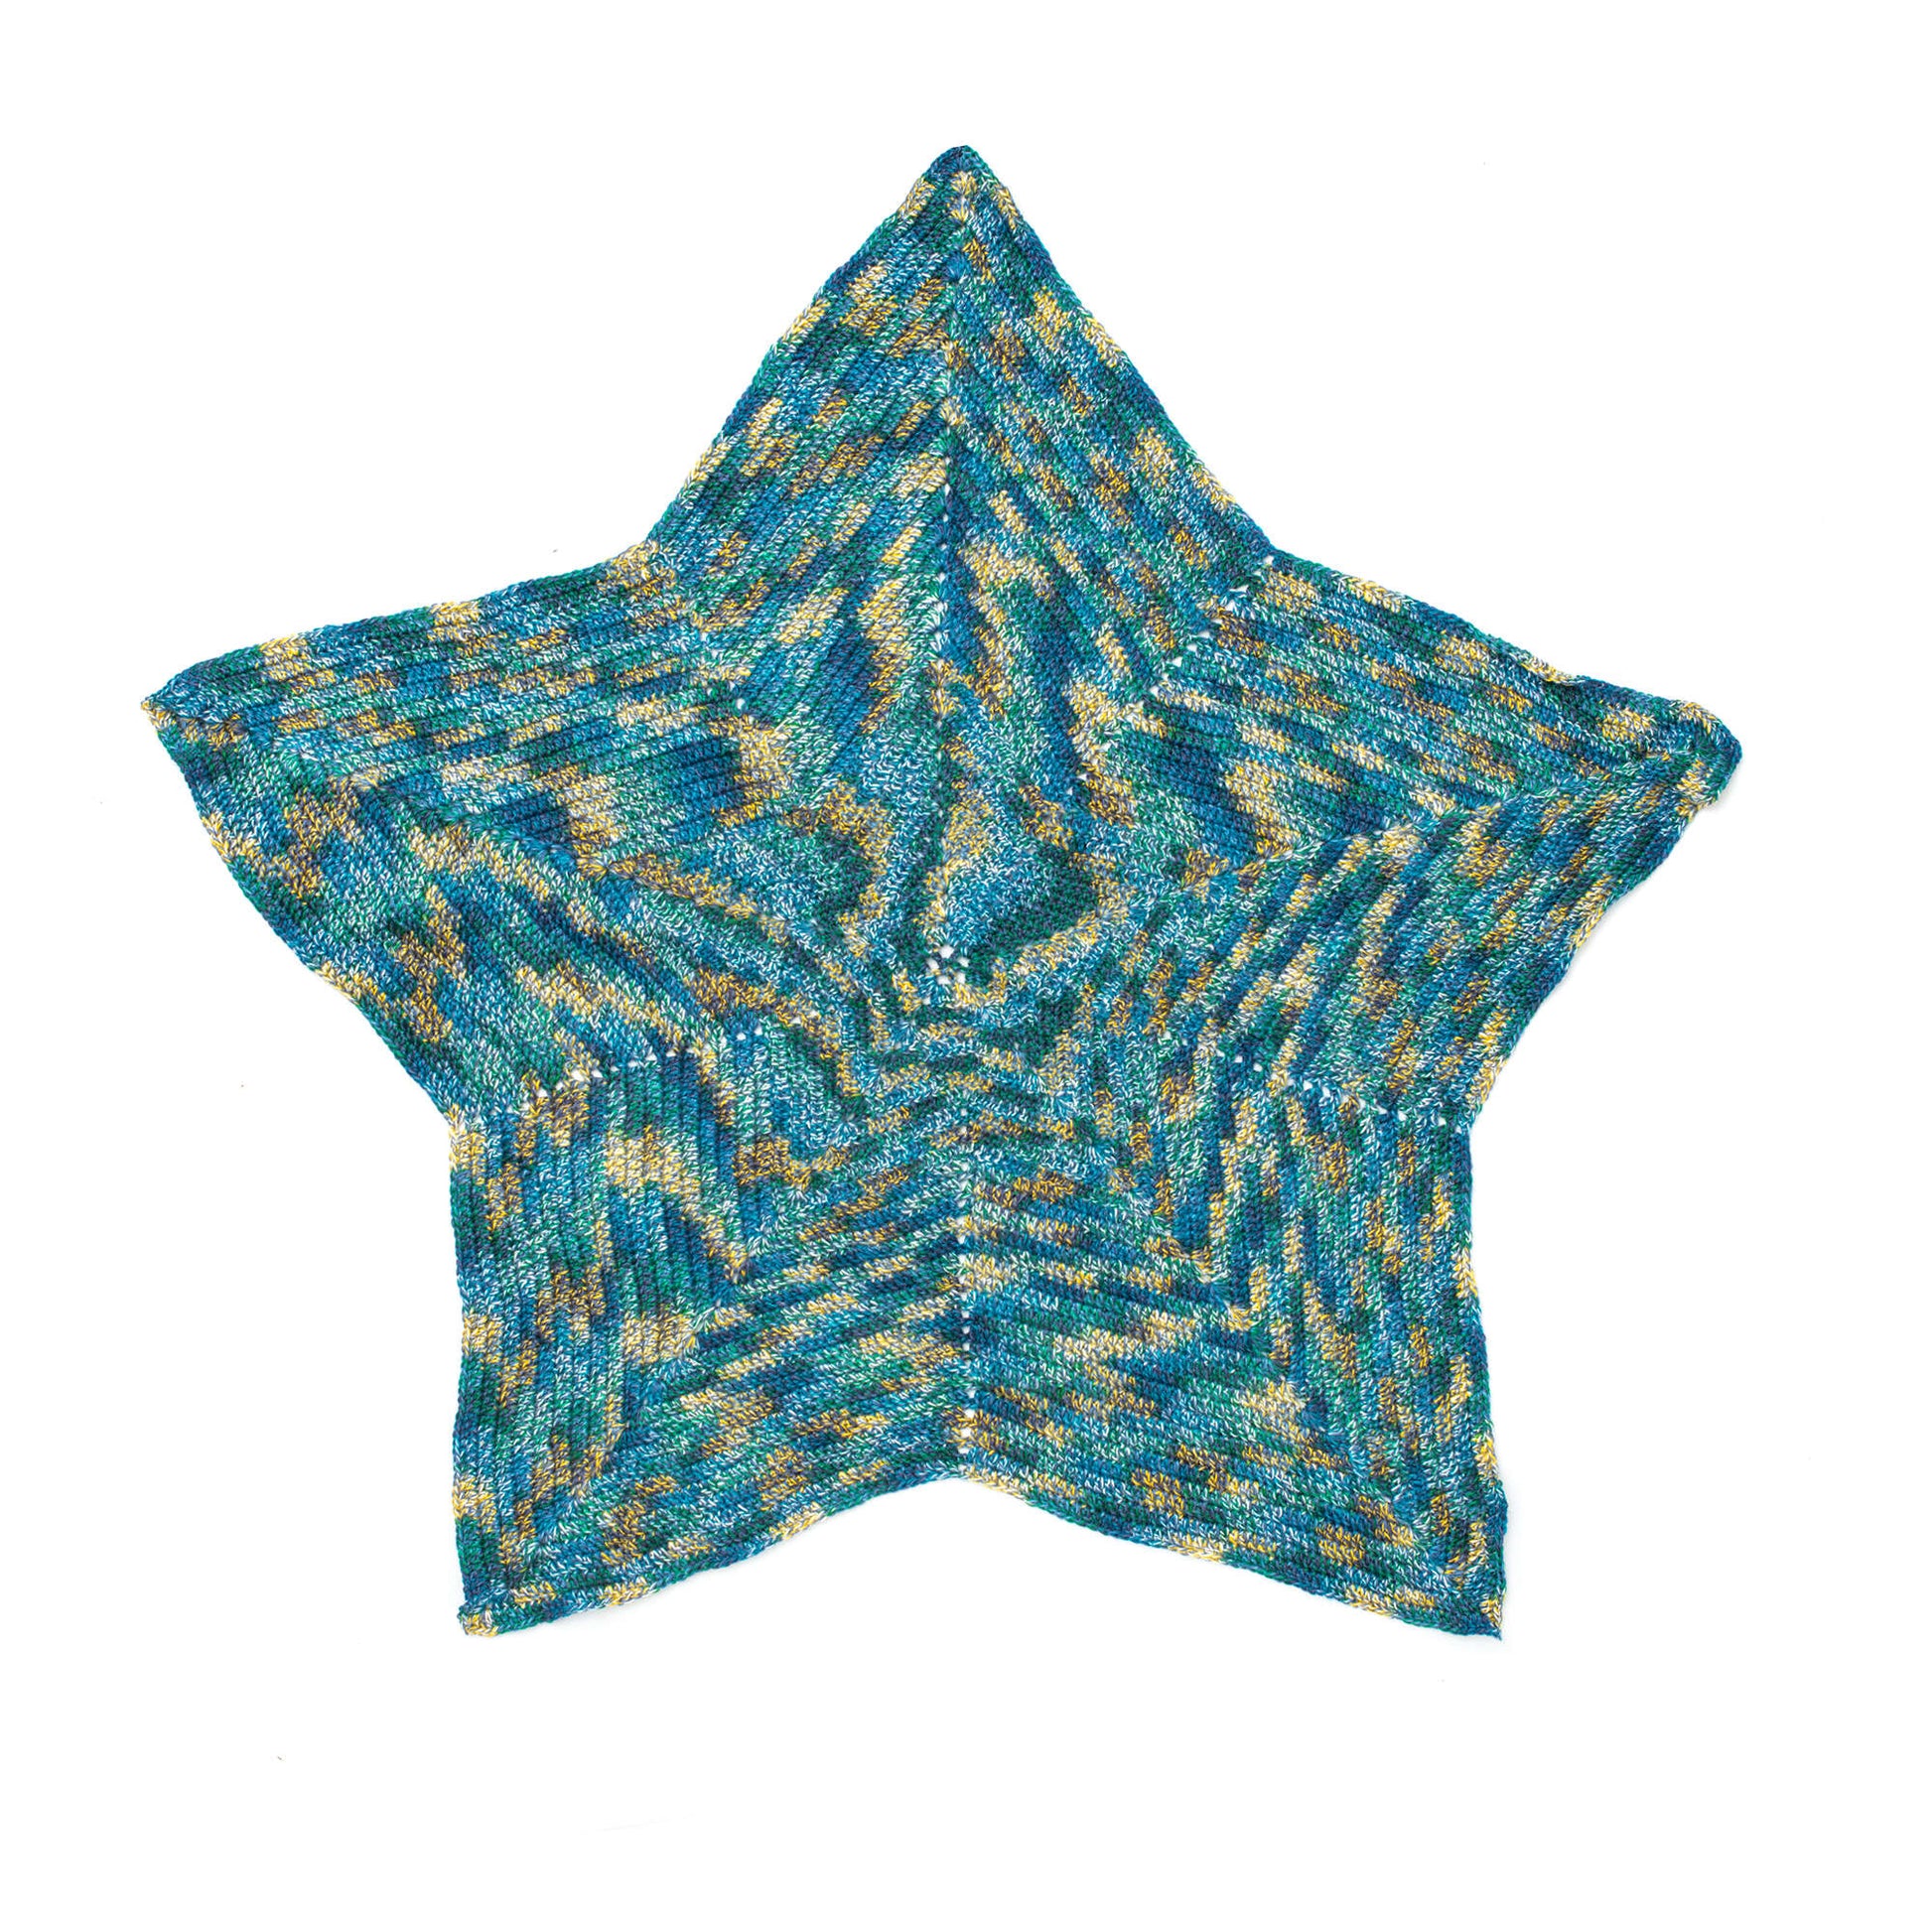 Bernat Starlight Crochet Blanket Crochet Blanket made in Bernat Softee Baby yarn